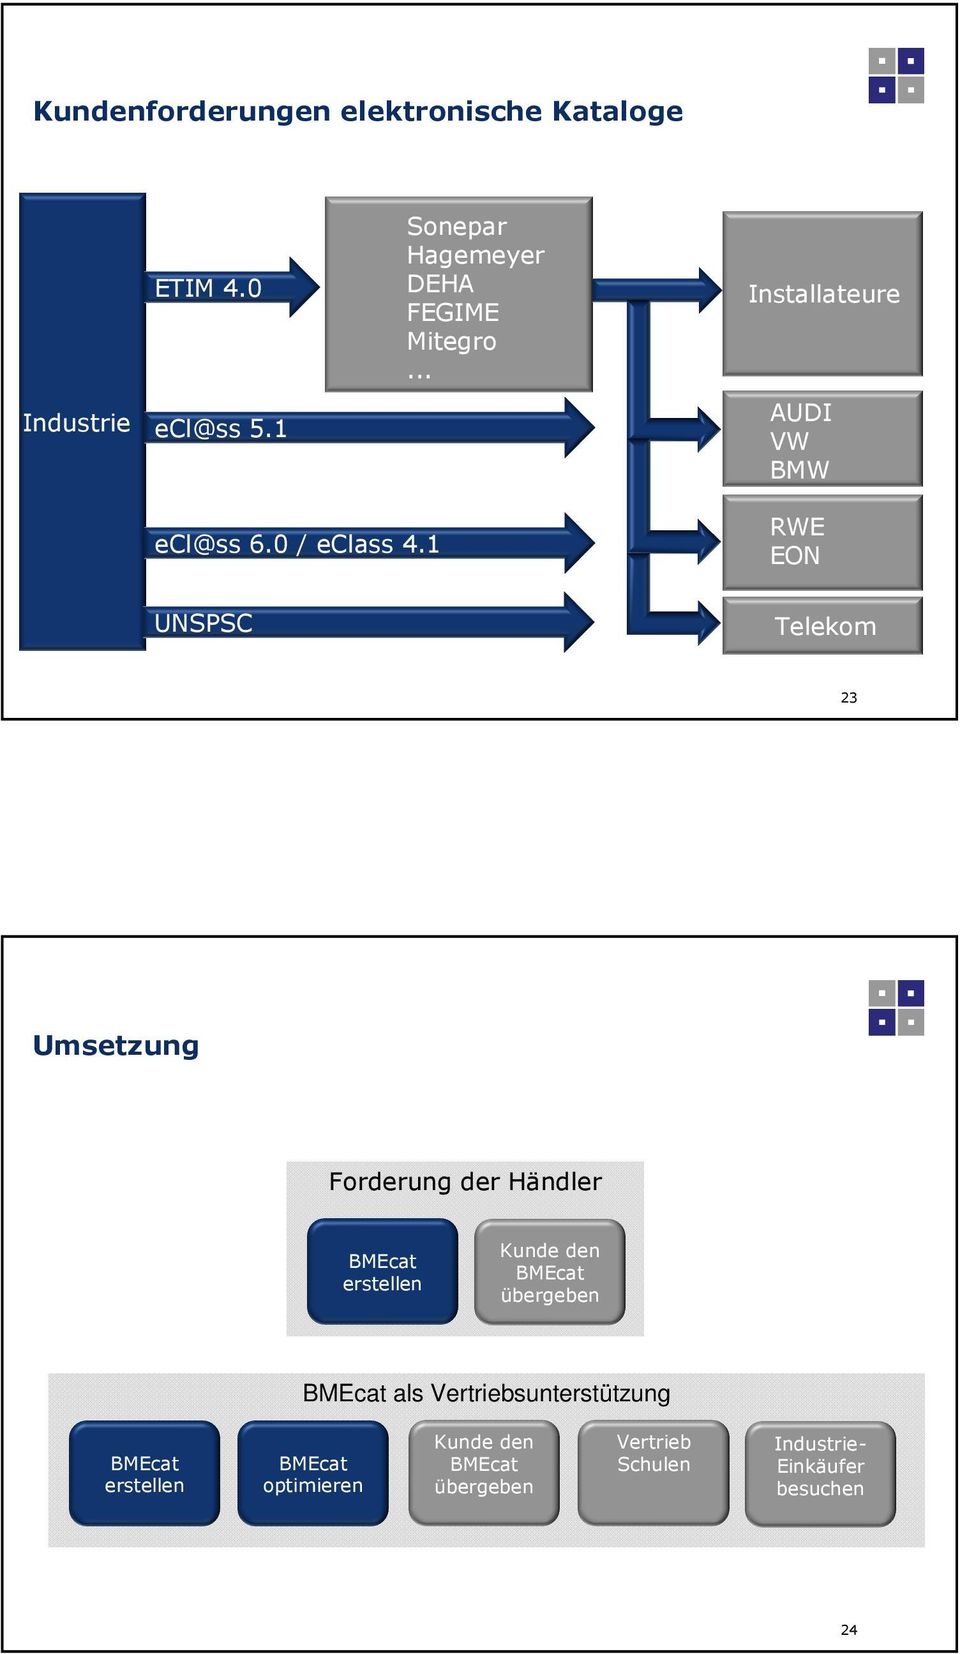 1 UNSPSC RWE EON Telekom 23 Umsetzung Forderung der Händler BMEcat erstellen Kunde den BMEcat